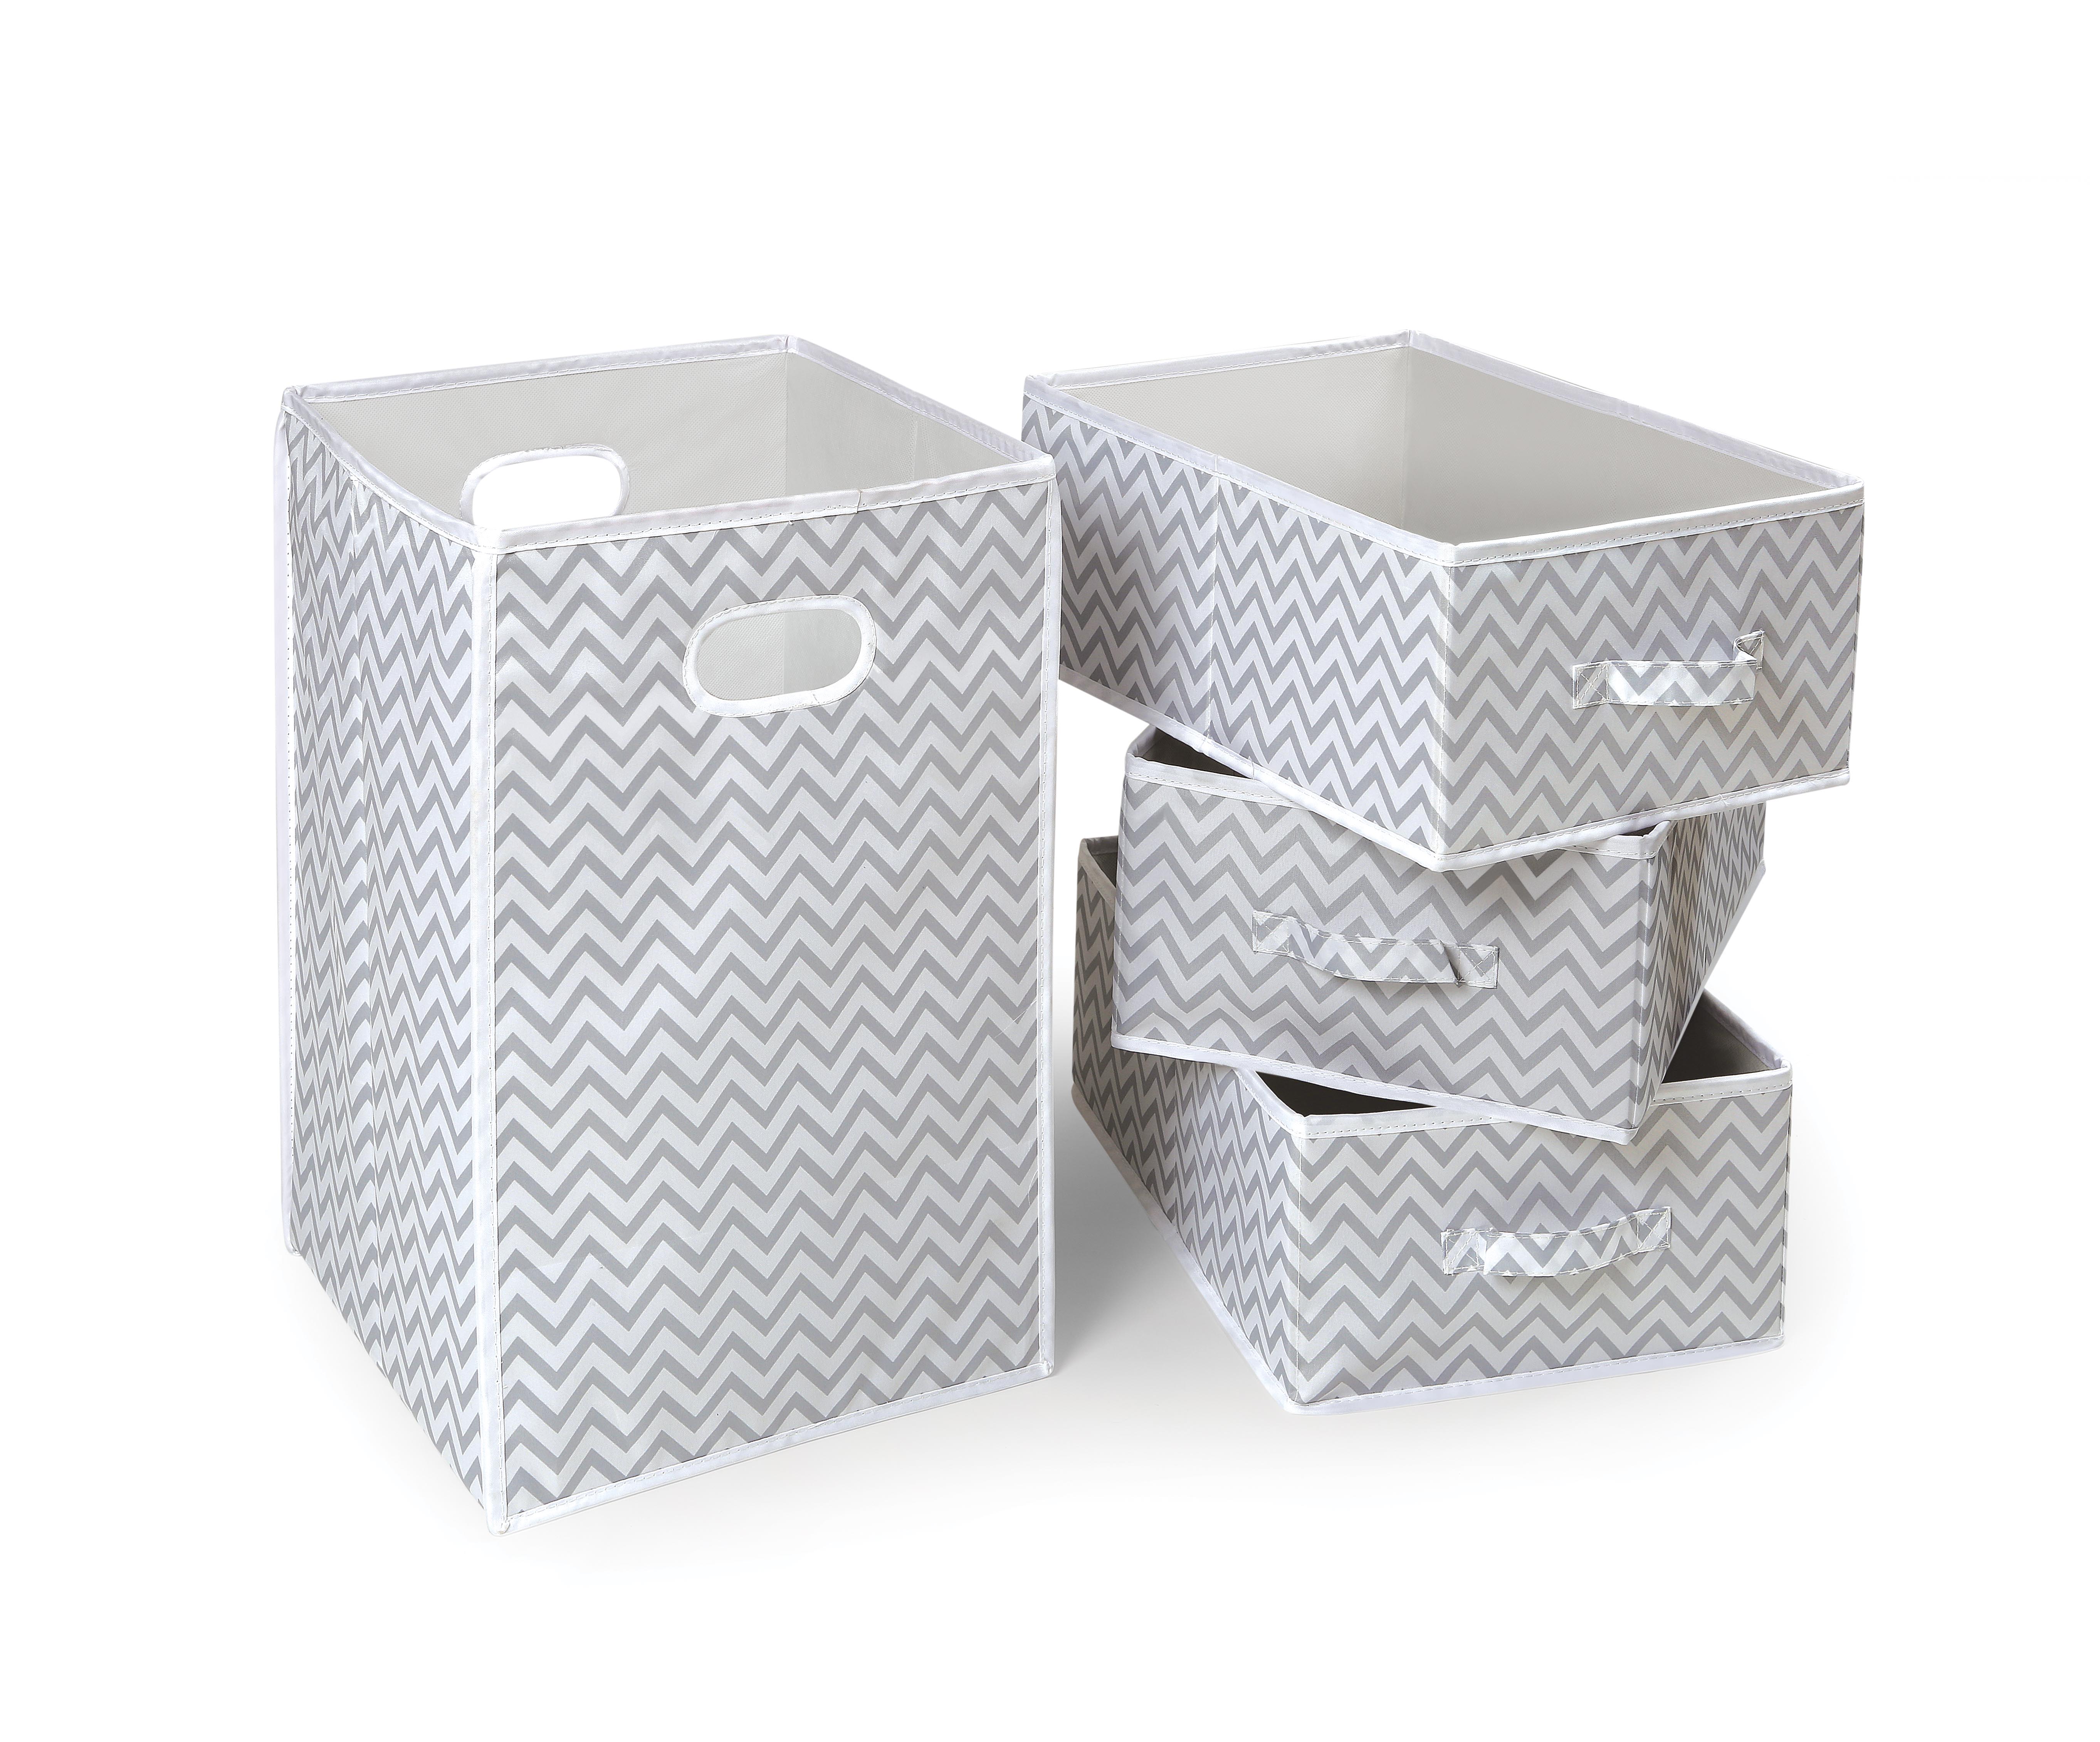 Folding Hamper and 3 Basket Set - Gray Chevron